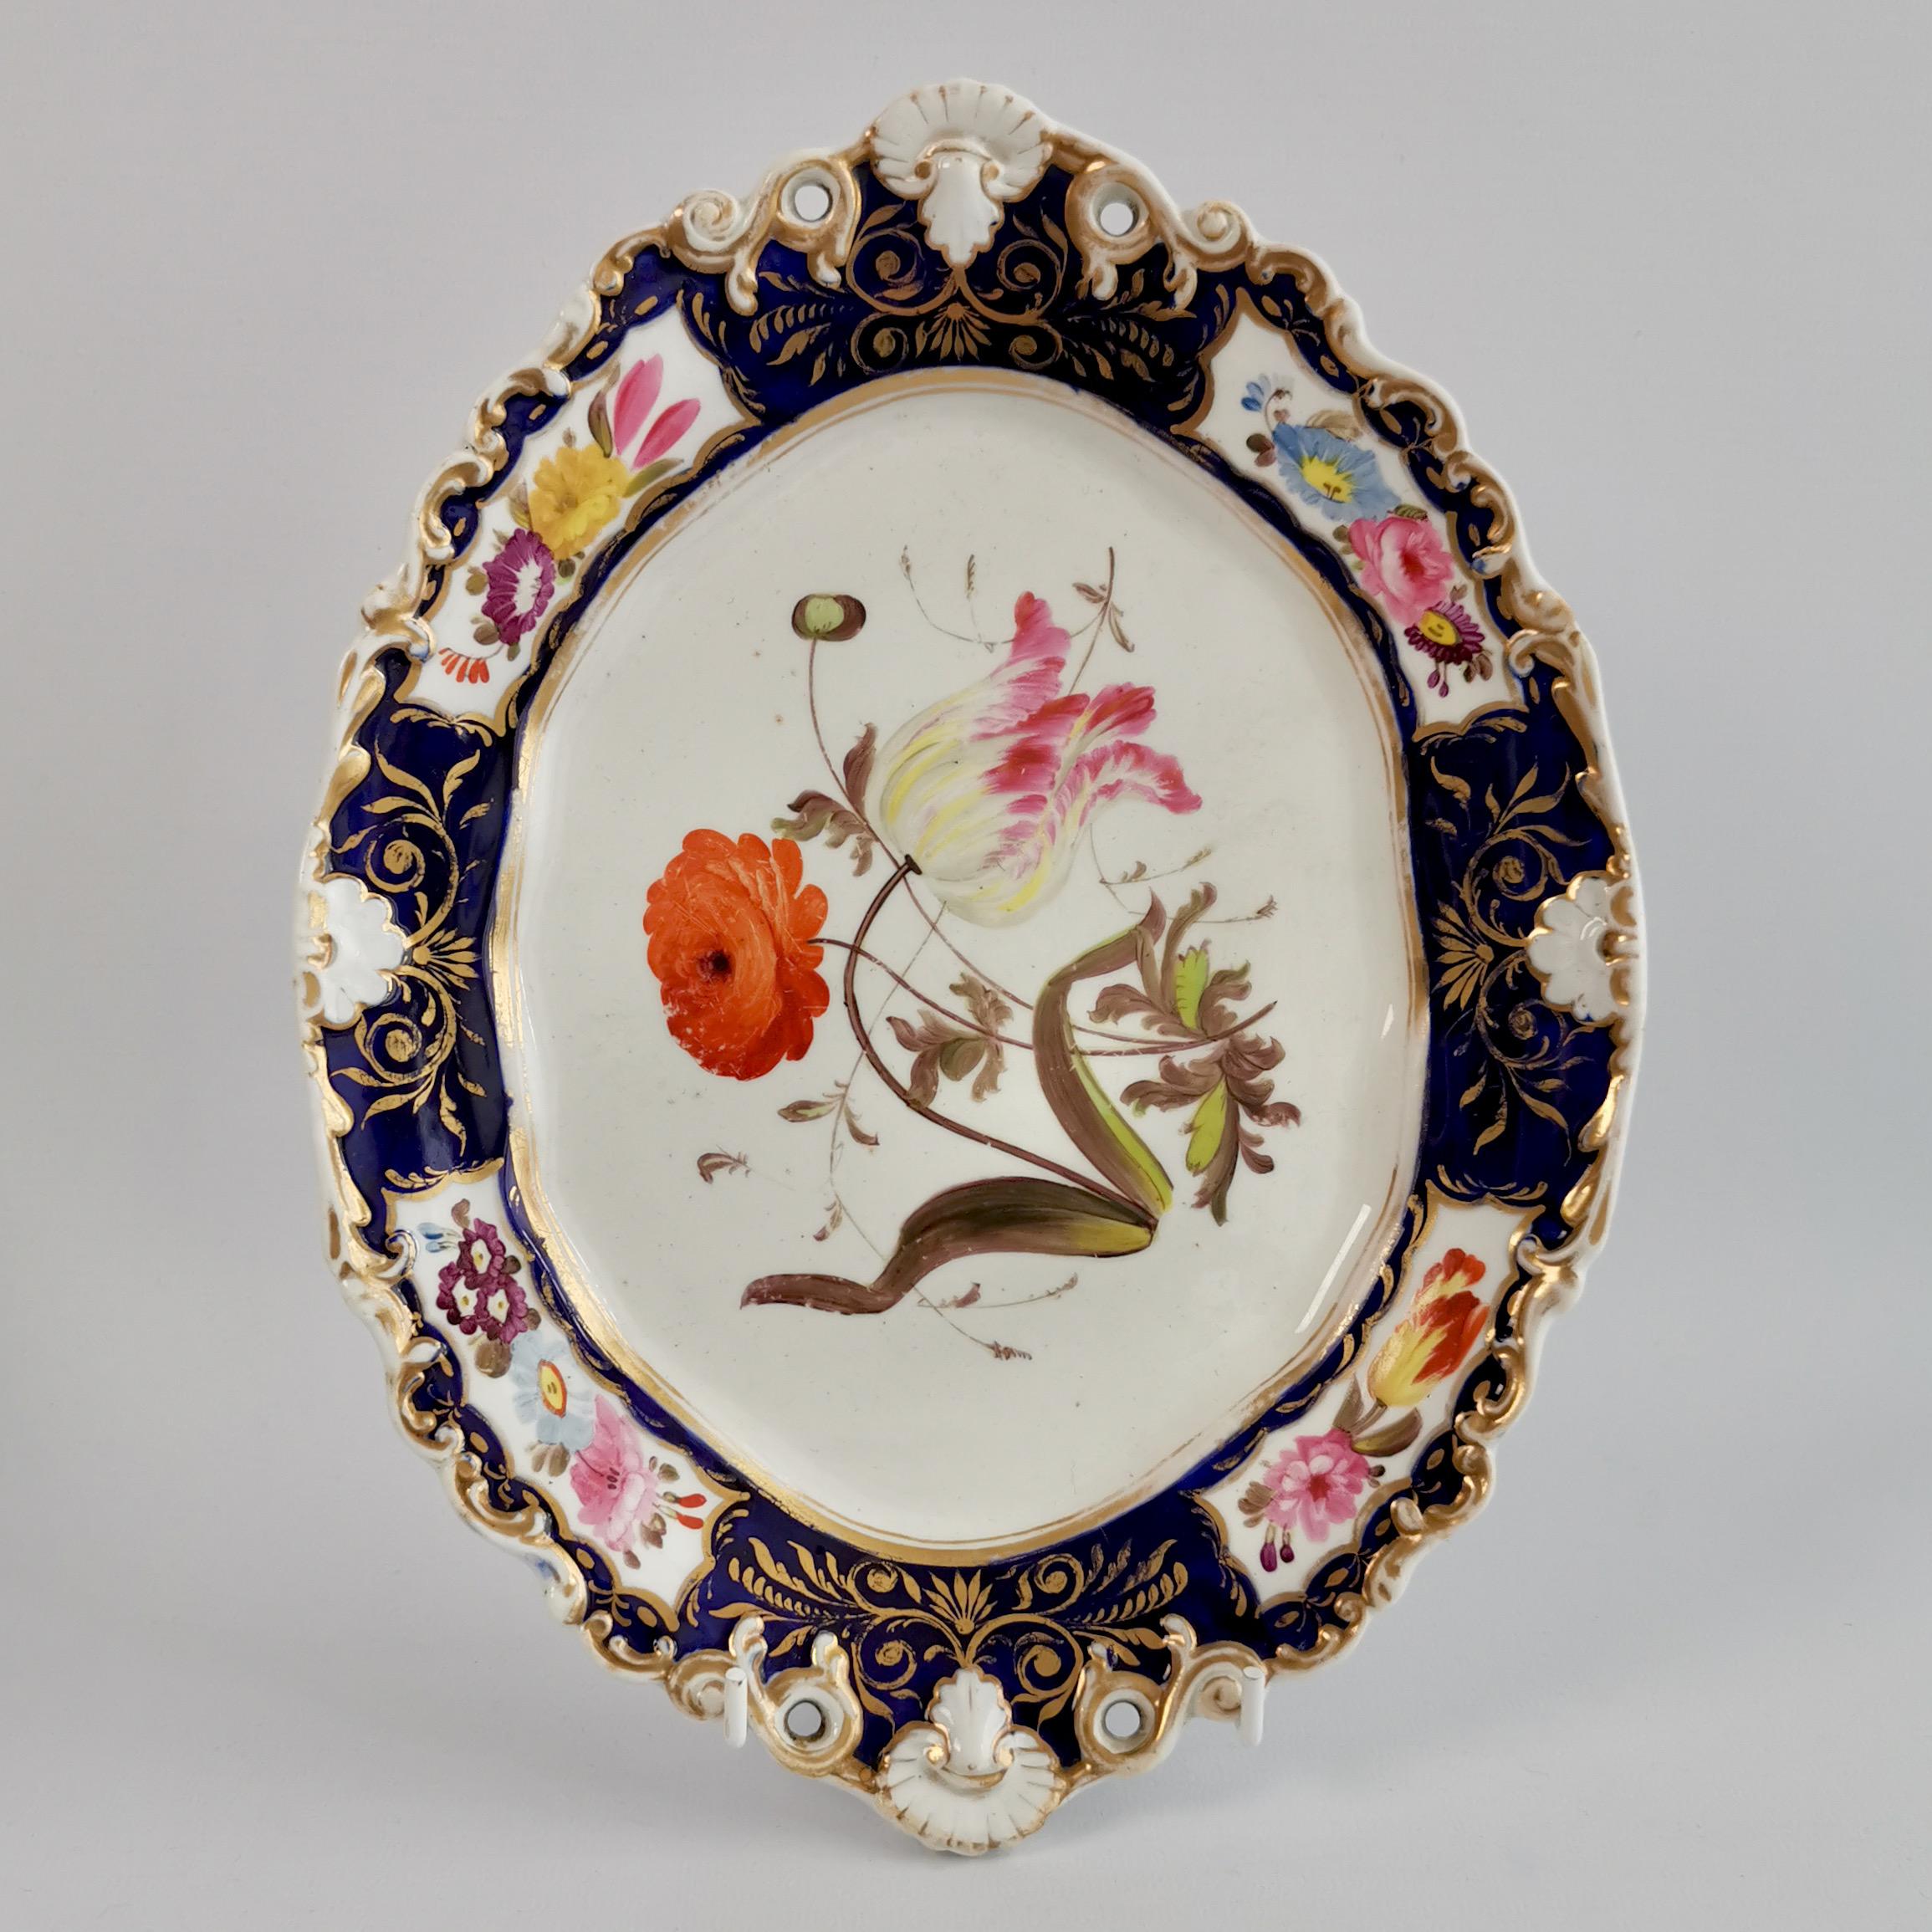 English New Hall Porcelain Part Dessert Service, Cobalt Blue, Flowers, Regency 1824-1830